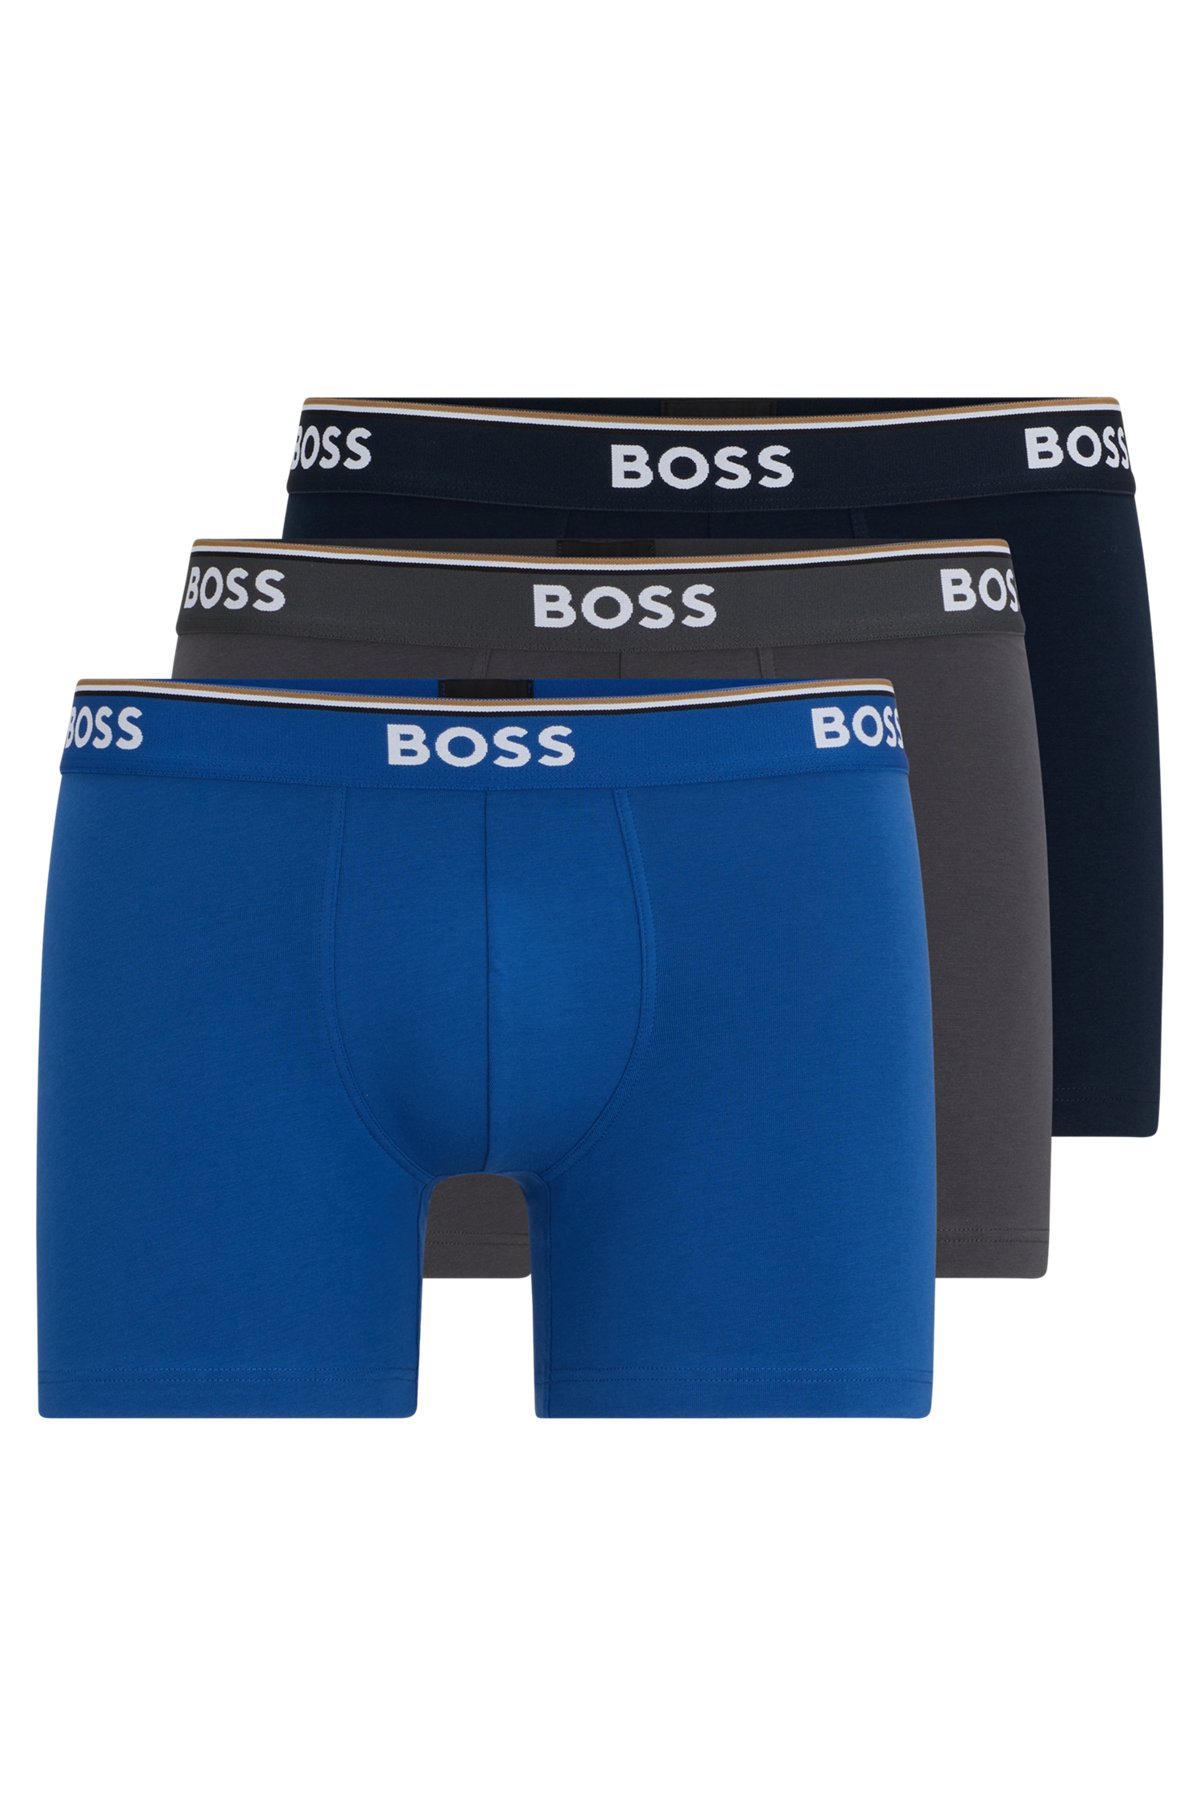 BOSS - ボクサーパンツ3枚セット ストレッチコットン ロゴ